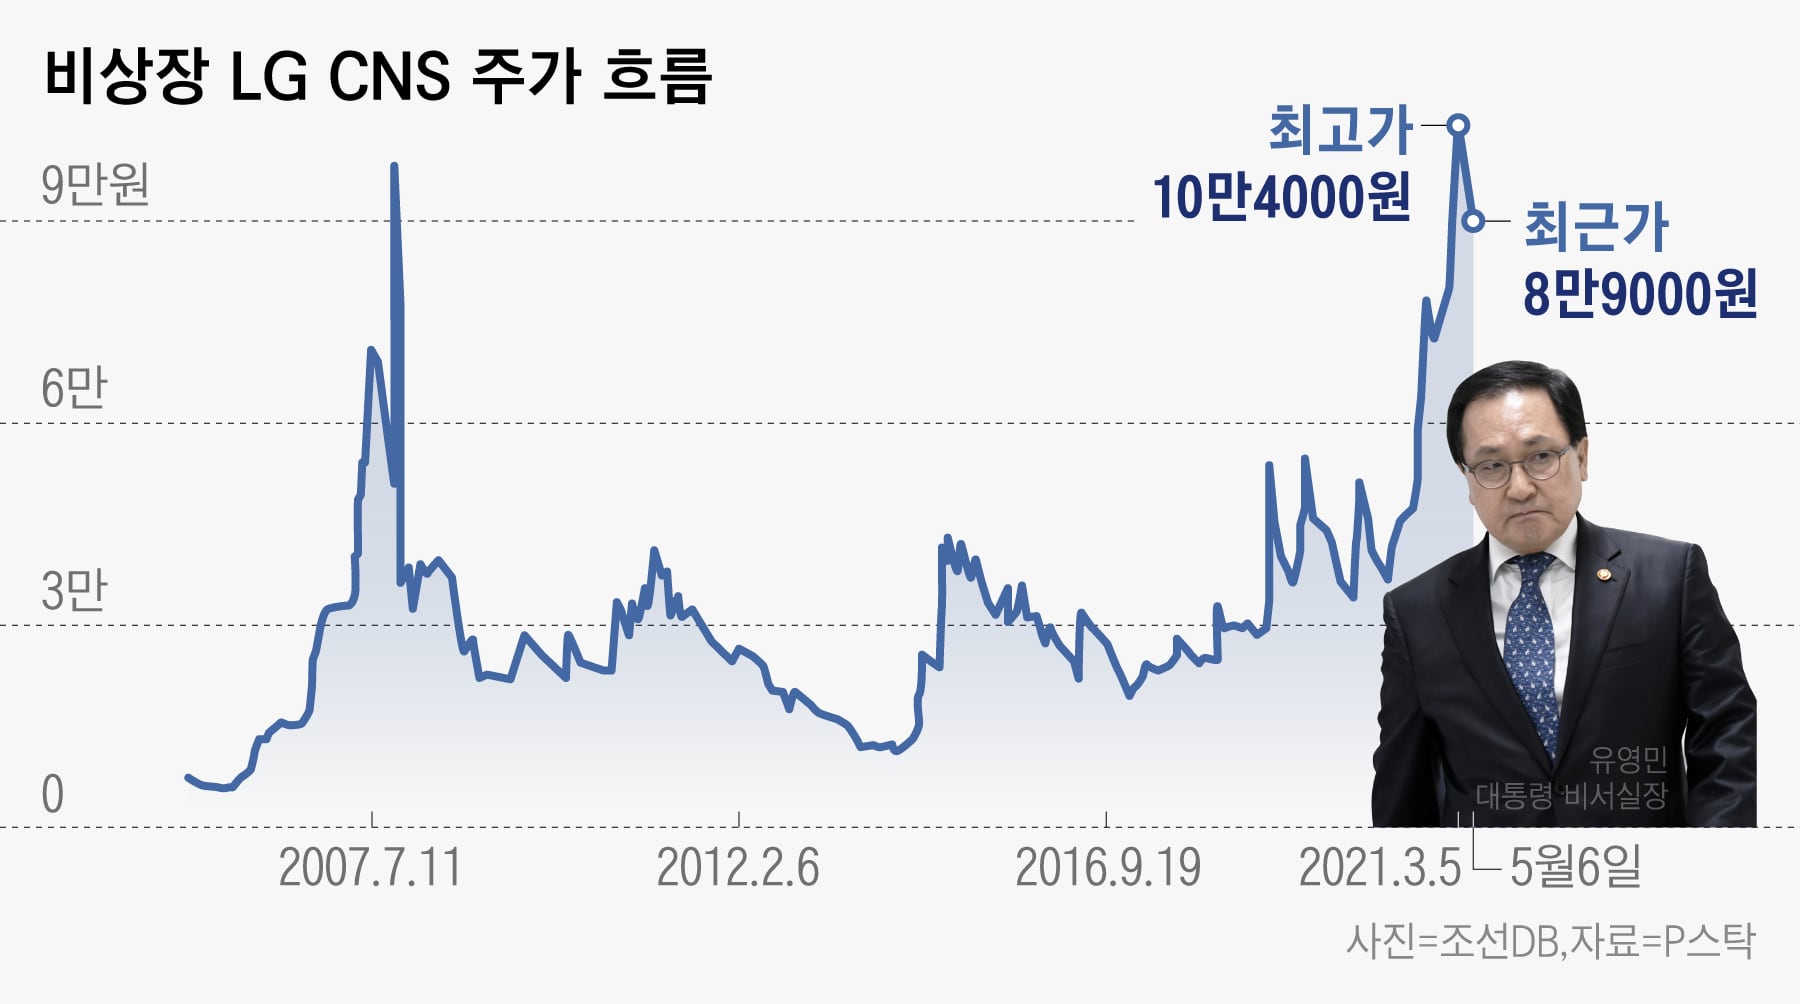 LG CNS IPO 일정 LG 배당금 배당정책 자사주 매입 주가 전망